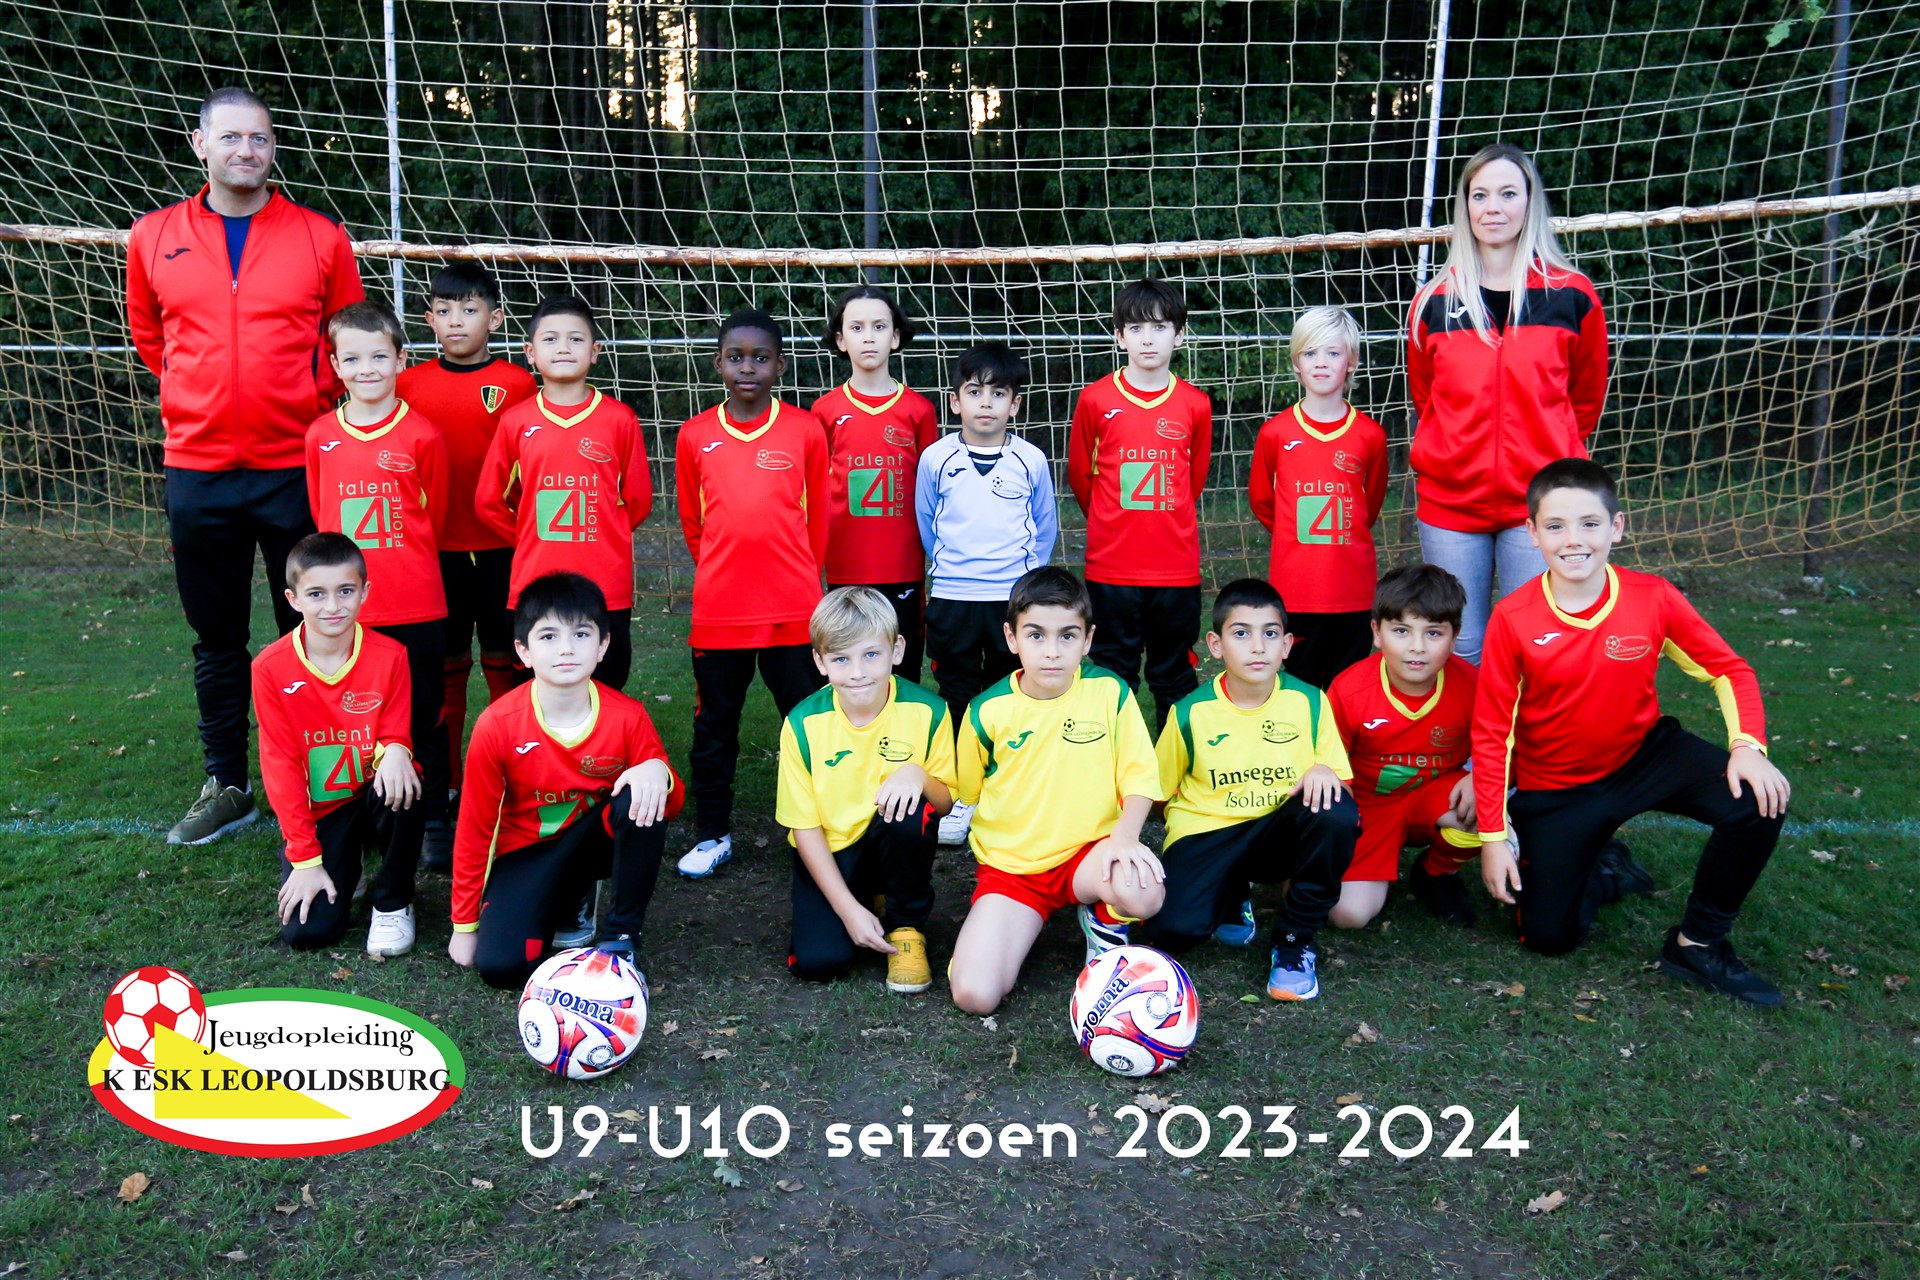 U9-U10 ploegfoto jeugdopleiding voetbalclub K.ESK Leopoldsburg